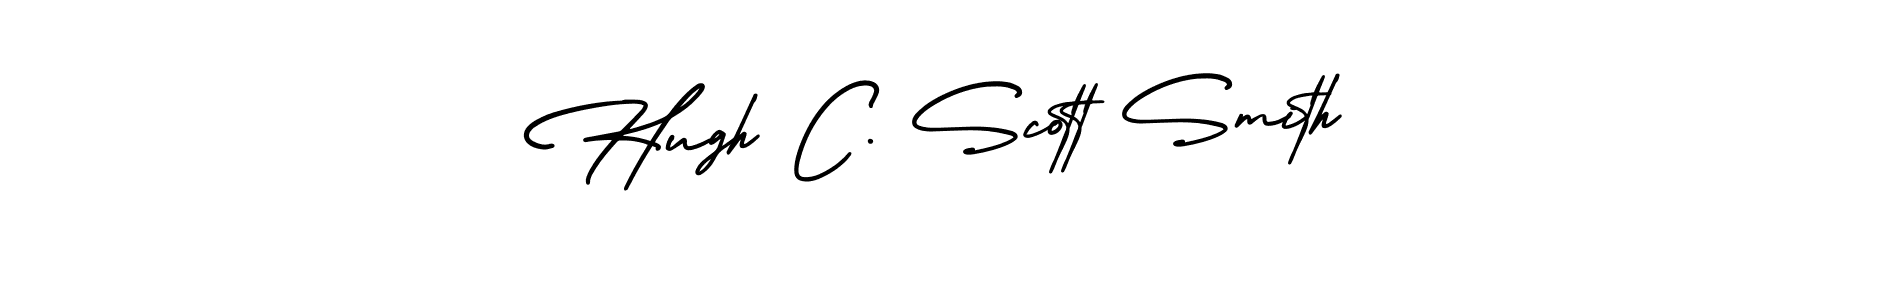 Hugh C. Scott Smith stylish signature style. Best Handwritten Sign (AmerikaSignatureDemo-Regular) for my name. Handwritten Signature Collection Ideas for my name Hugh C. Scott Smith. Hugh C. Scott Smith signature style 3 images and pictures png